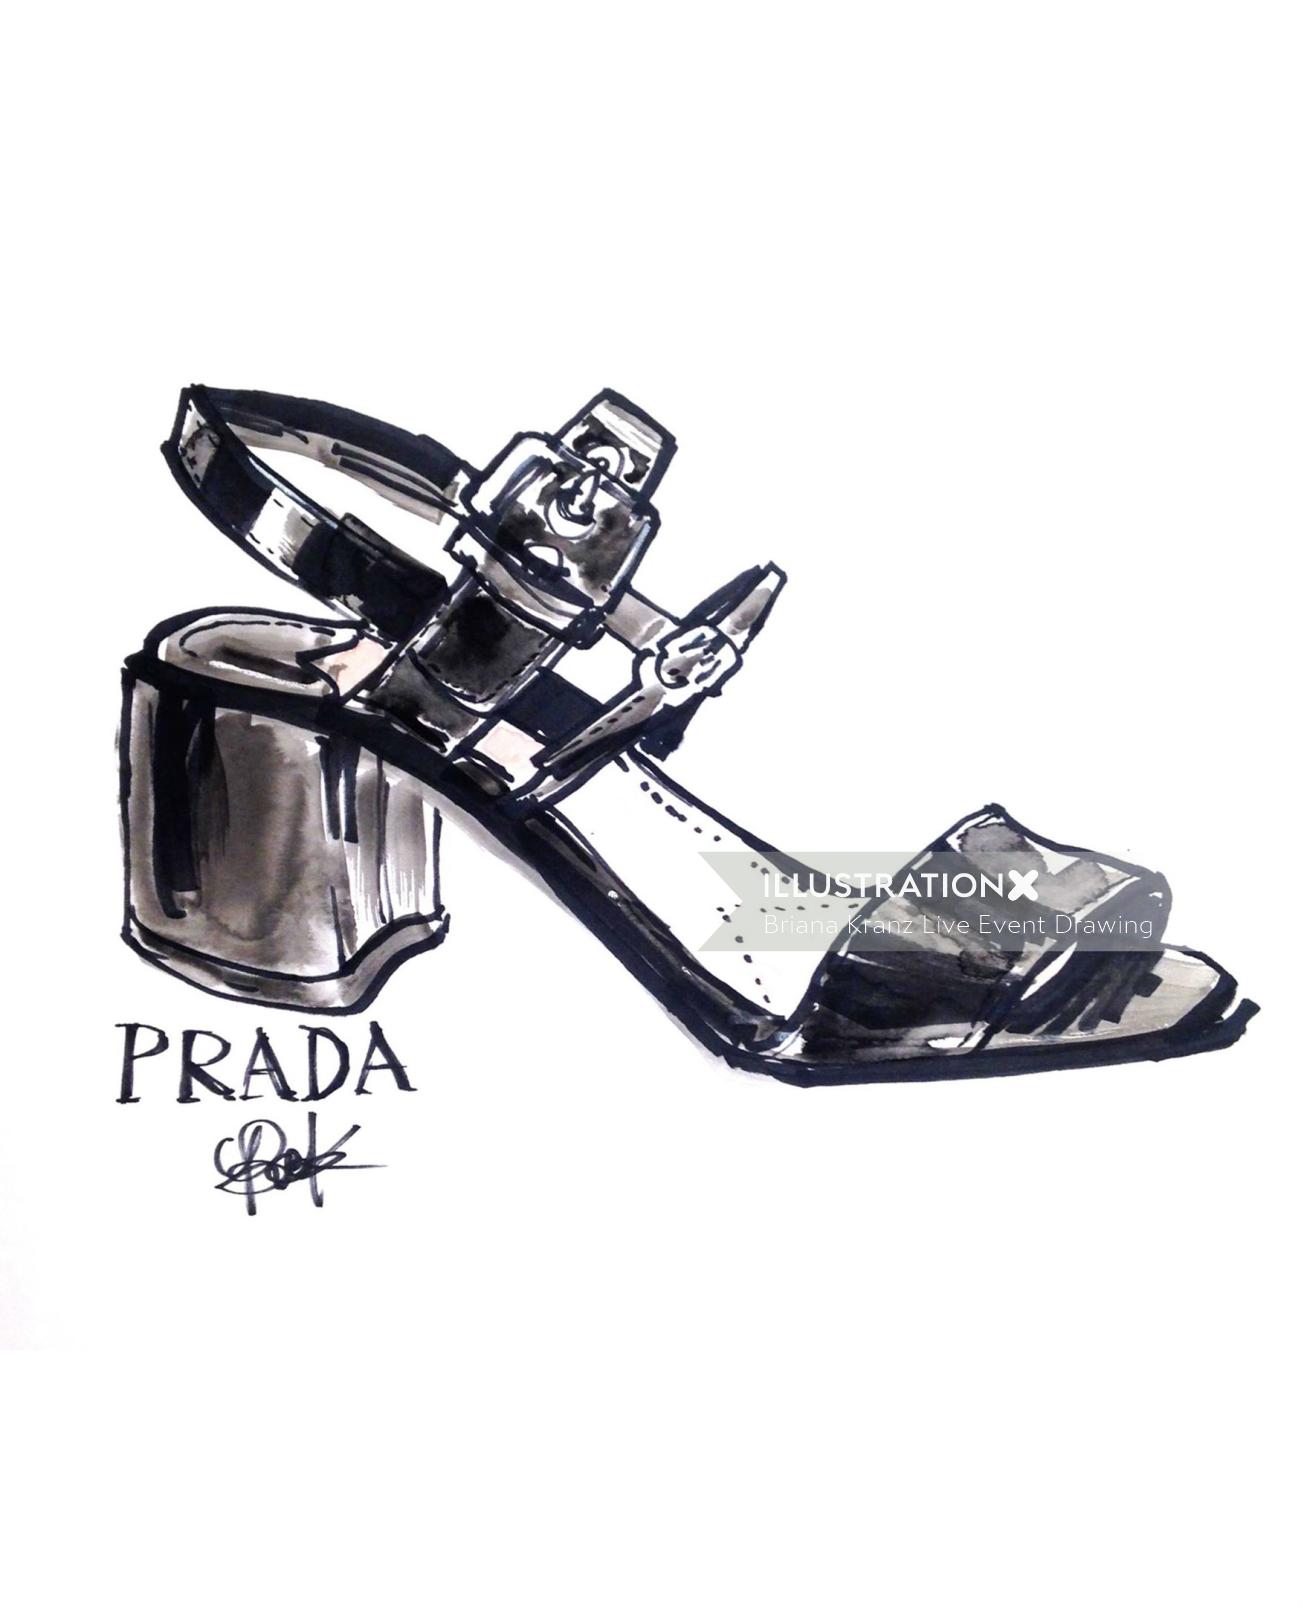 Black & white sketch for Prada women's shoe